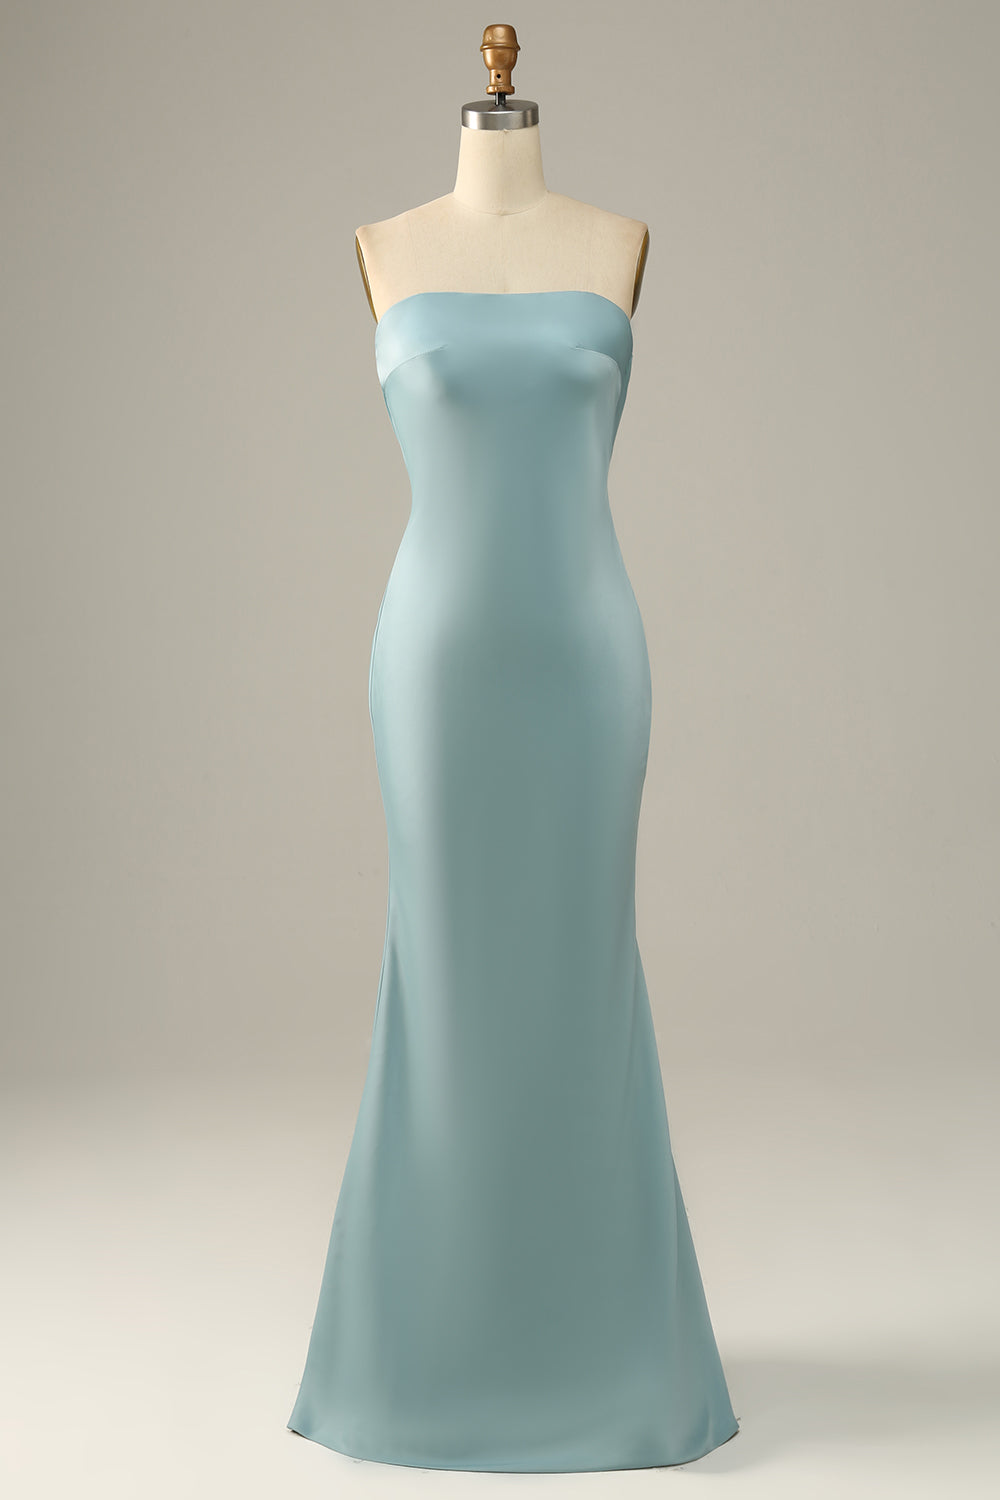 Zapakasa Women Bridesmaid Dress Grey Blue Satin Mermaid Prom Dress